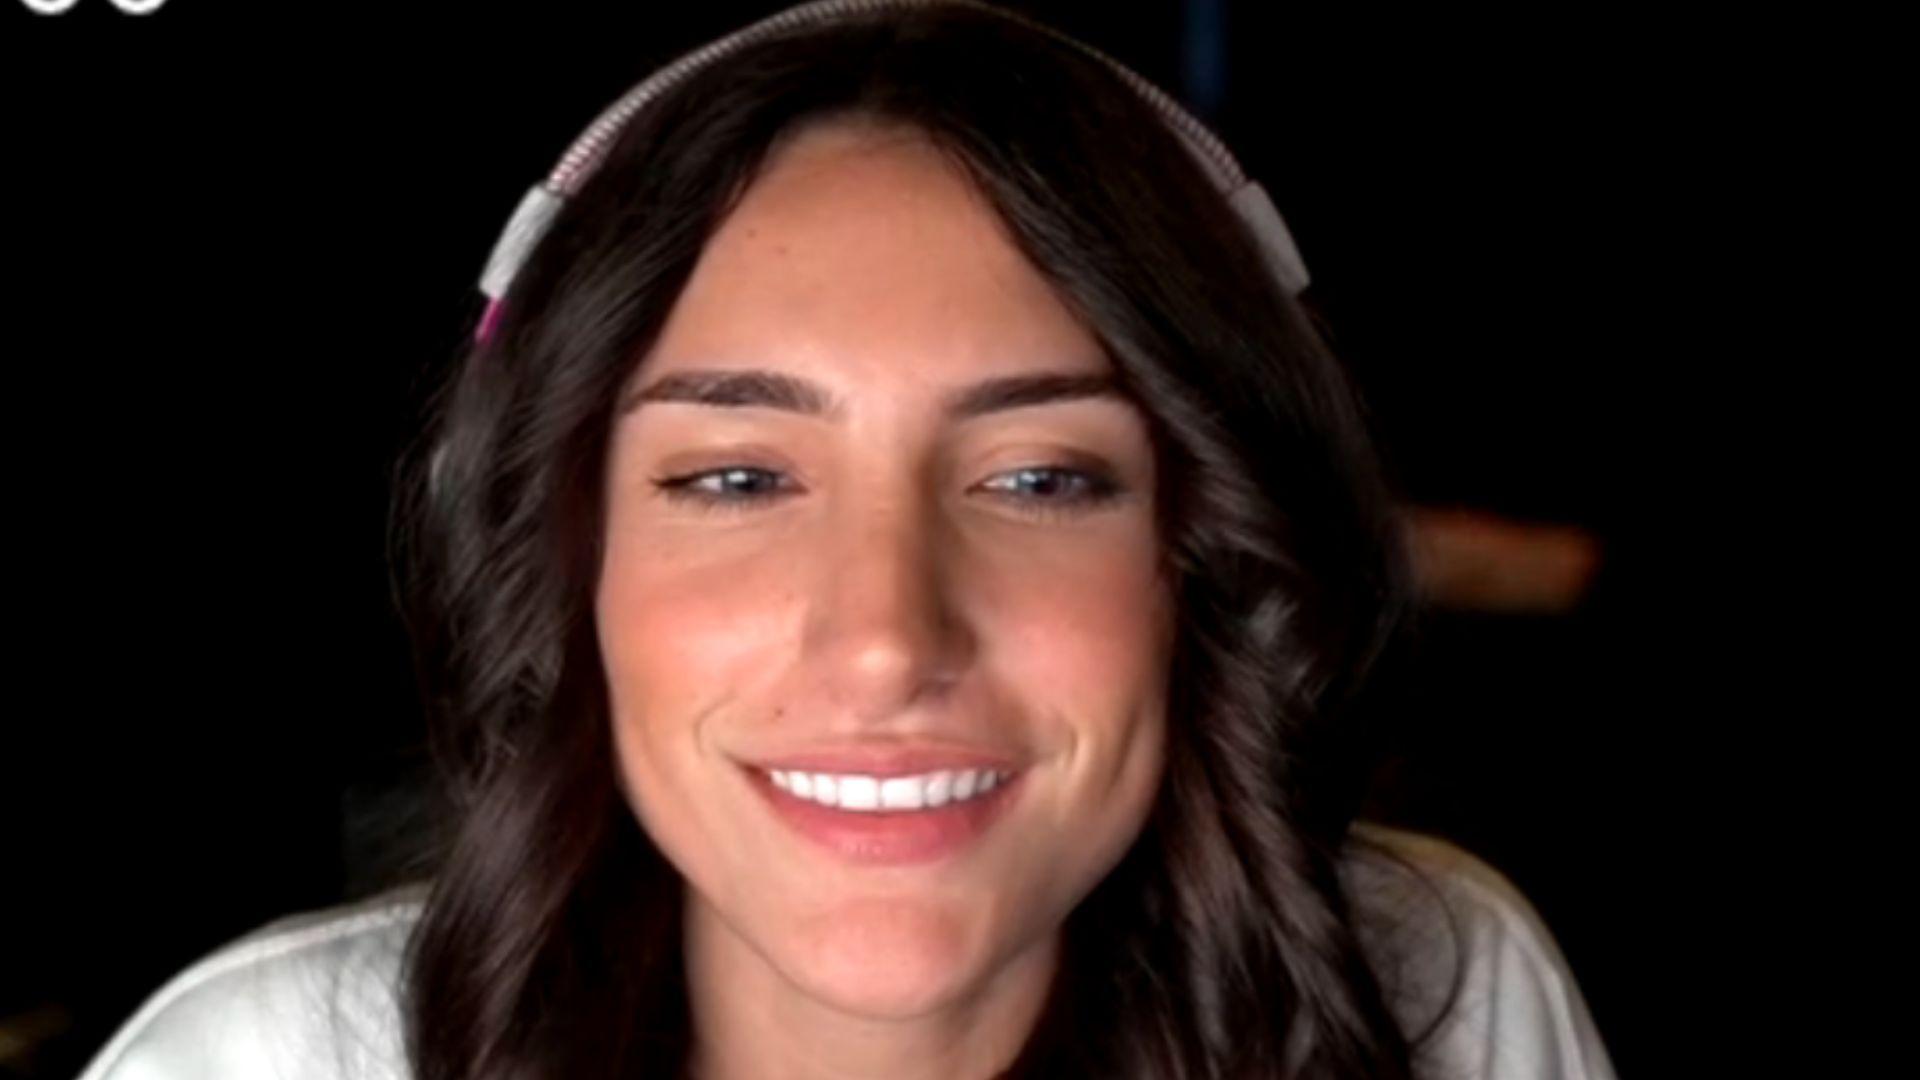 Nadia smiling on stream in white shirt